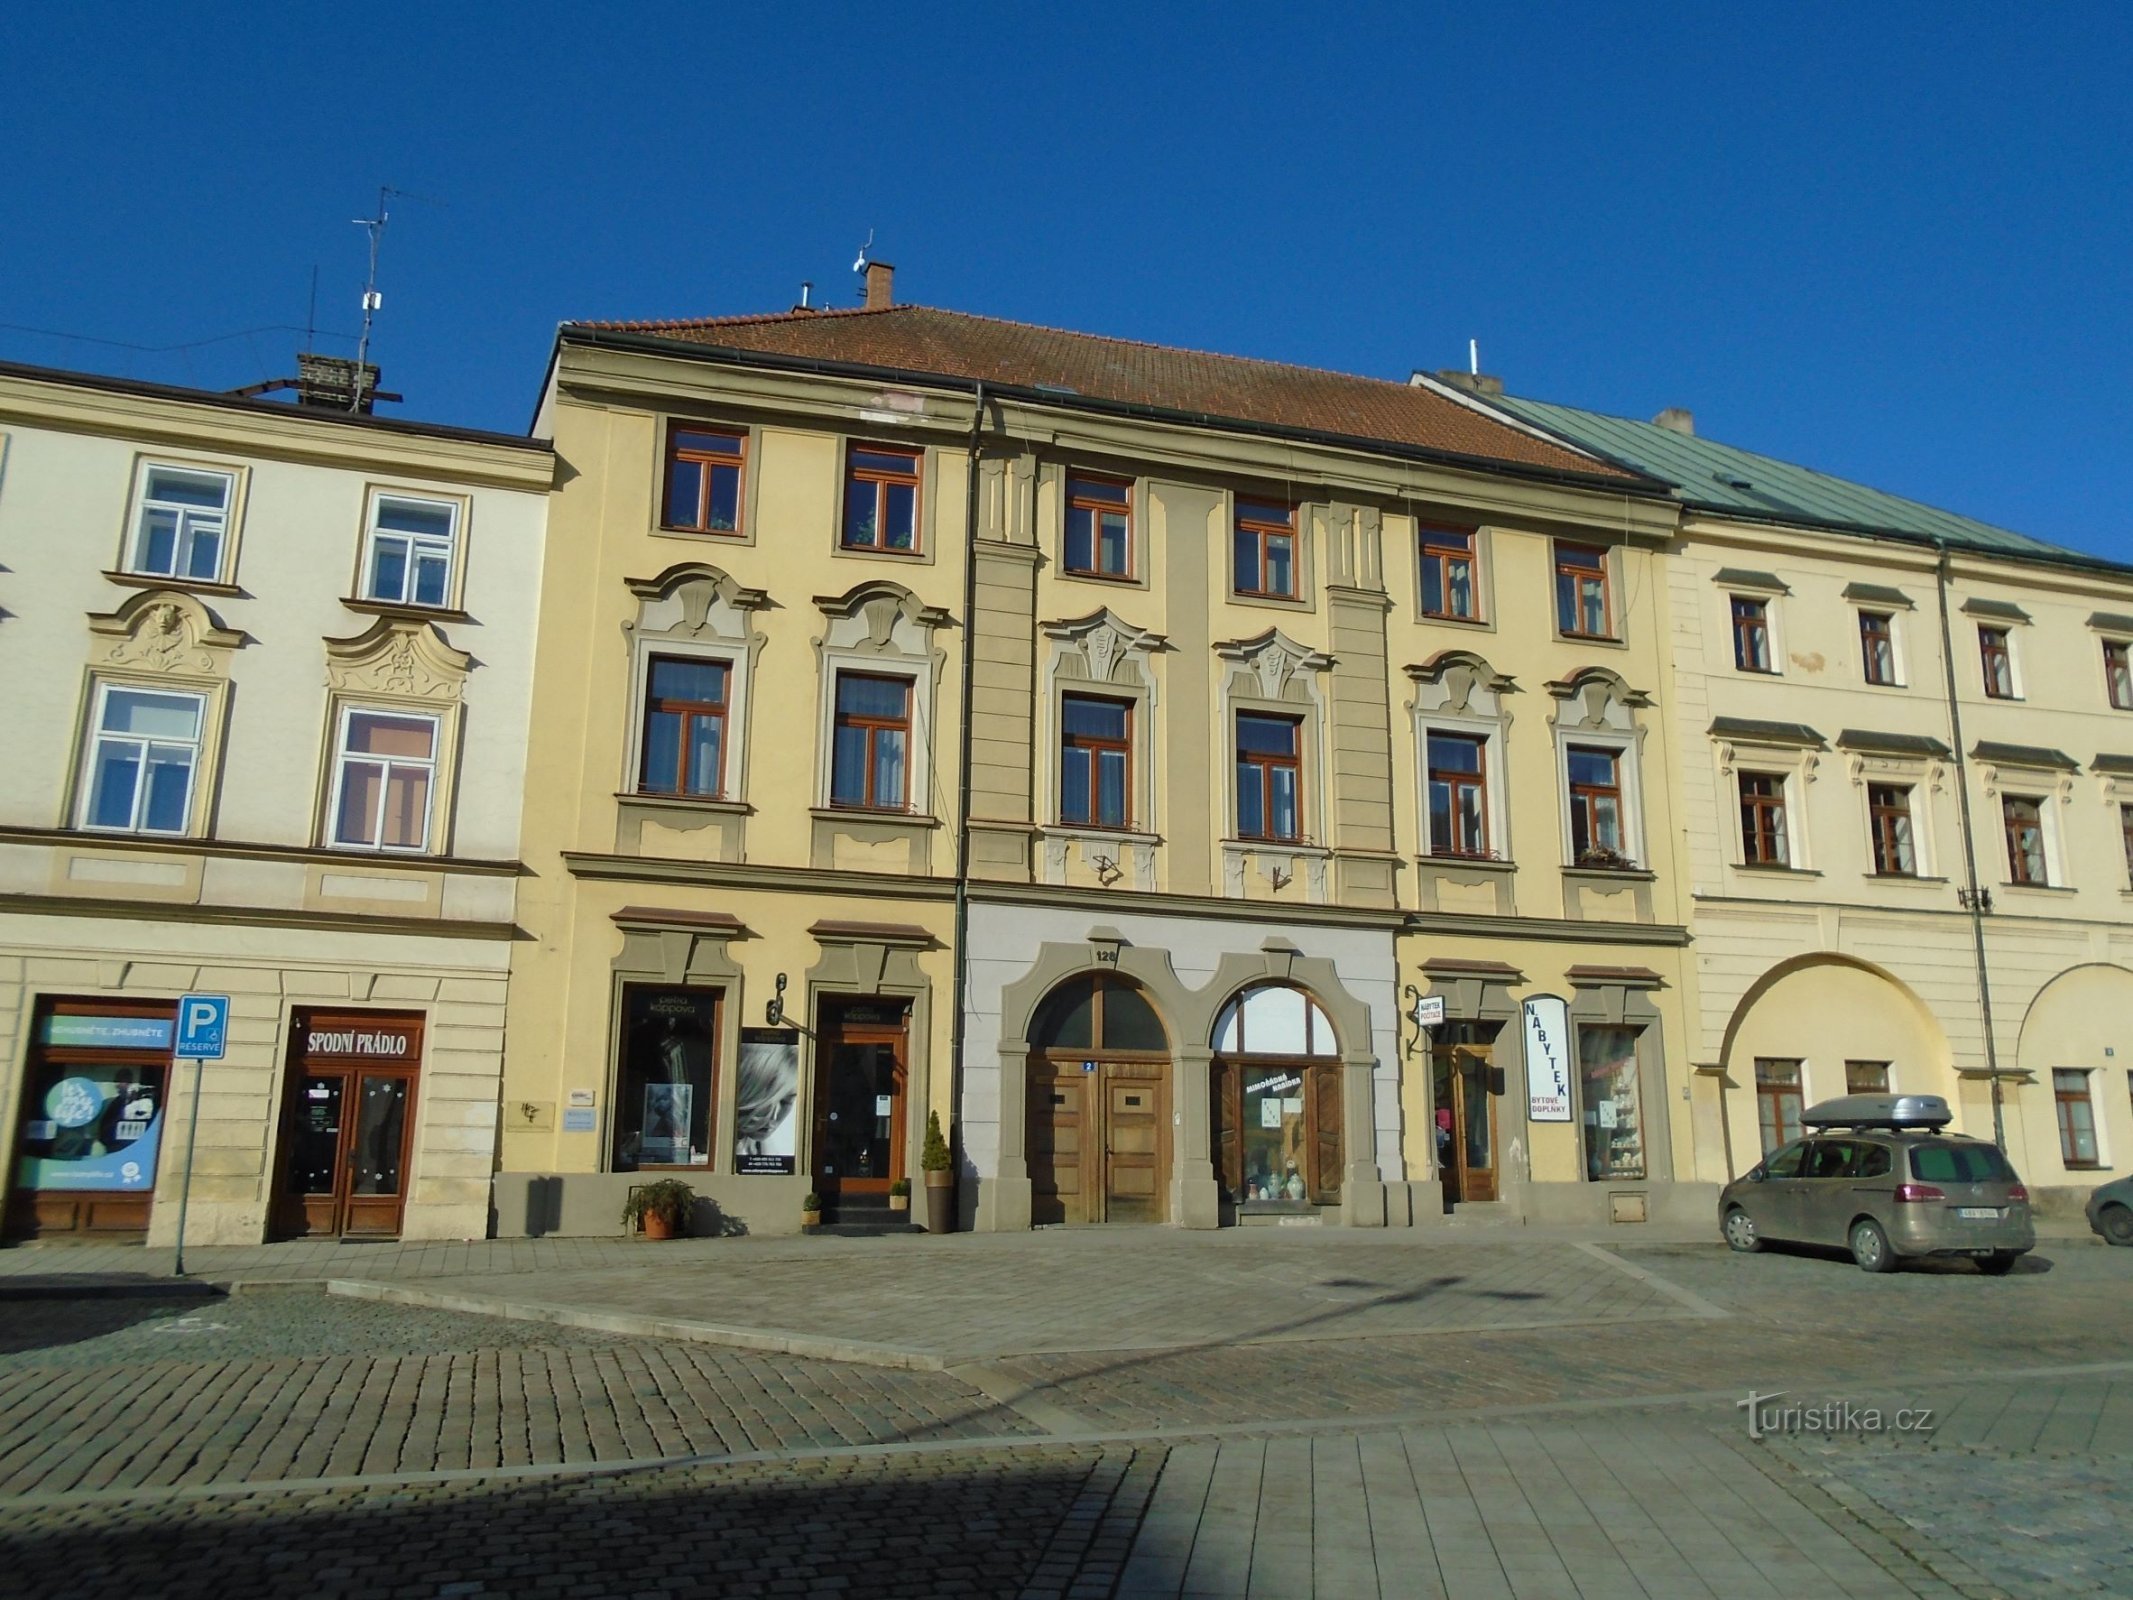 Malé náměstí số 128 (Hradec Králové, ngày 25.2.2018 tháng XNUMX năm XNUMX)